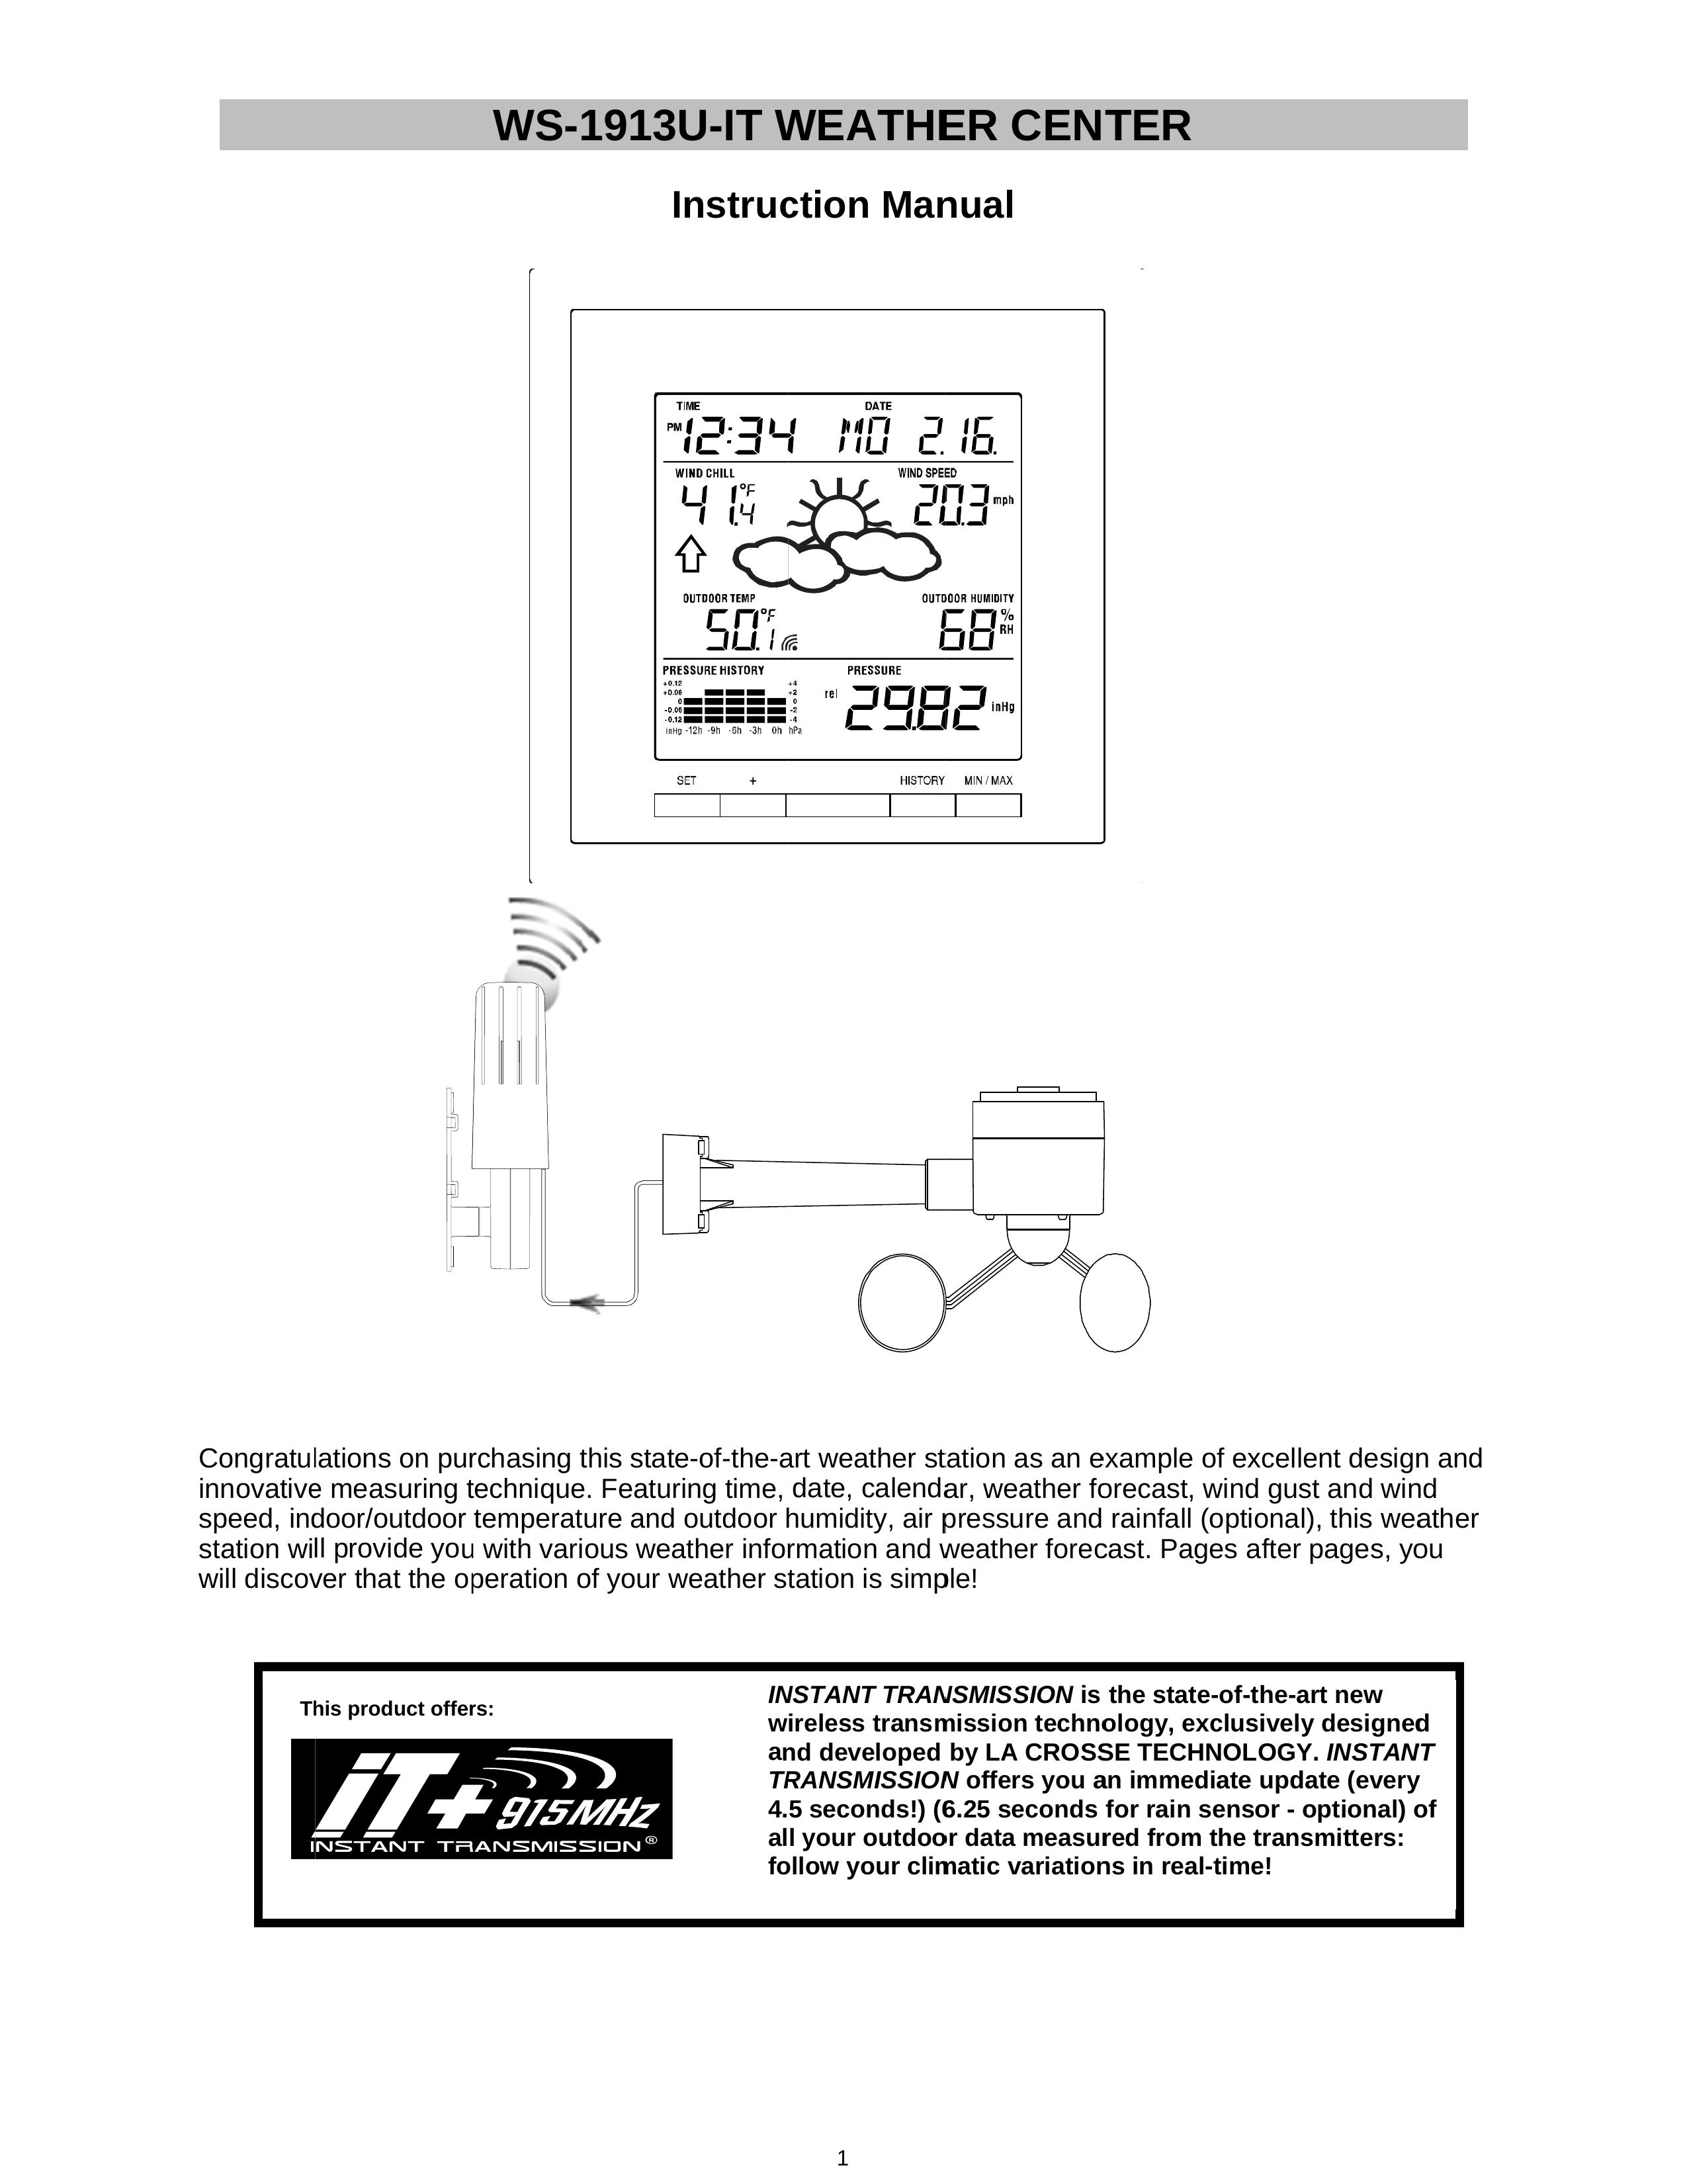 La Crosse Technology WS-1913U-IT Marine Radio User Manual